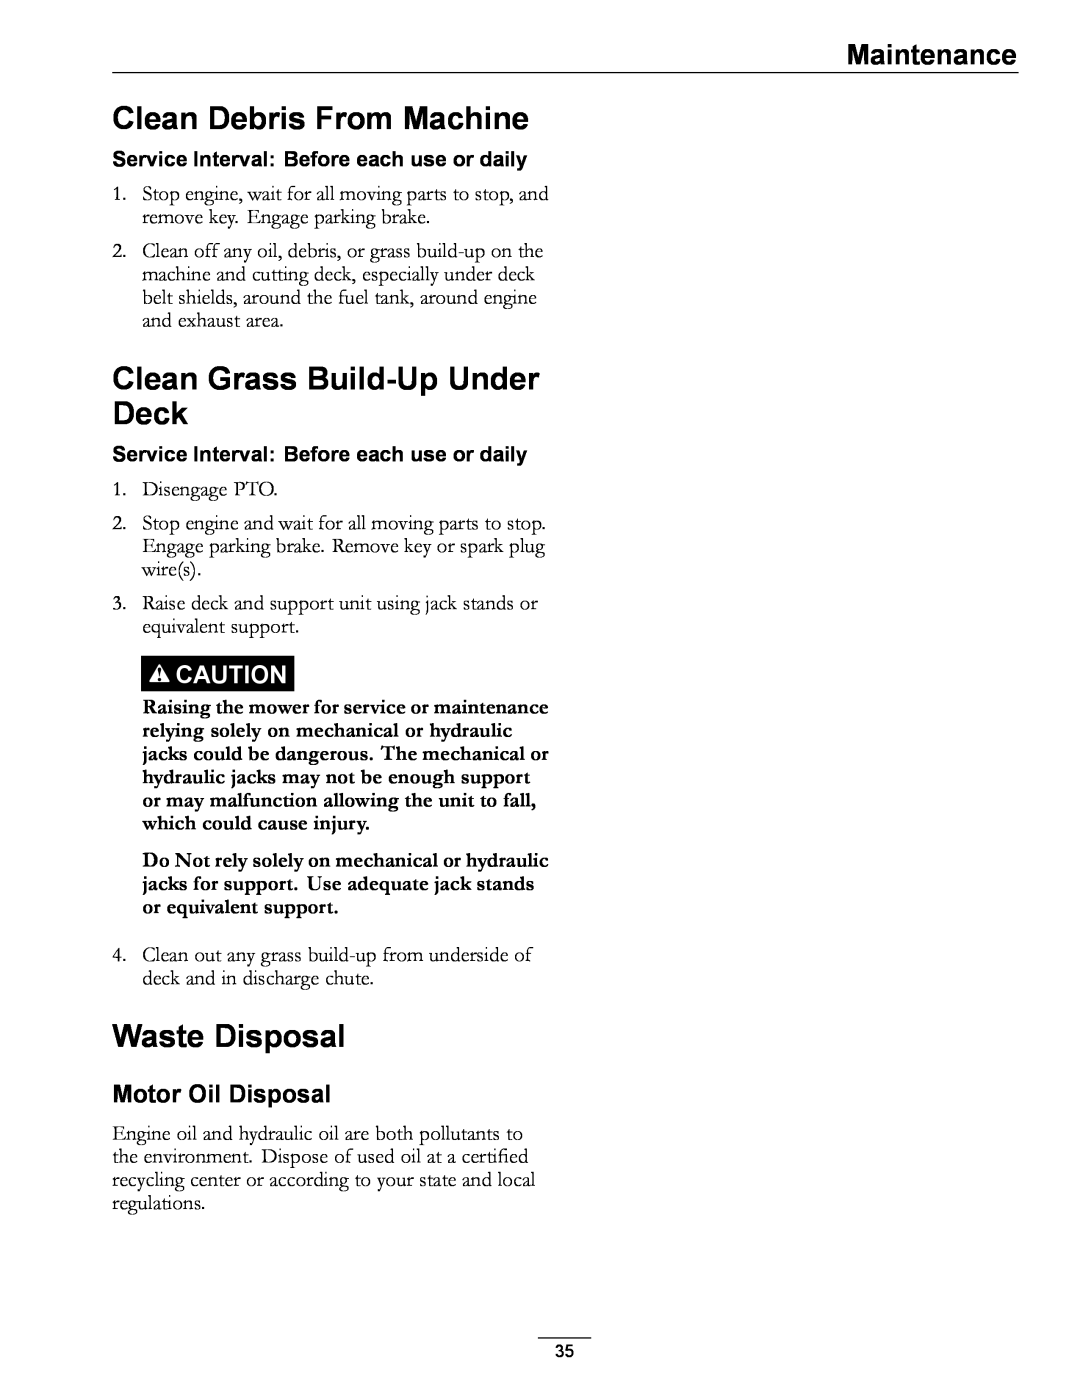 Exmark 00 & Higher, 850 manual Clean Debris From Machine, Clean Grass Build-UpUnder Deck, Waste Disposal, Motor Oil Disposal 